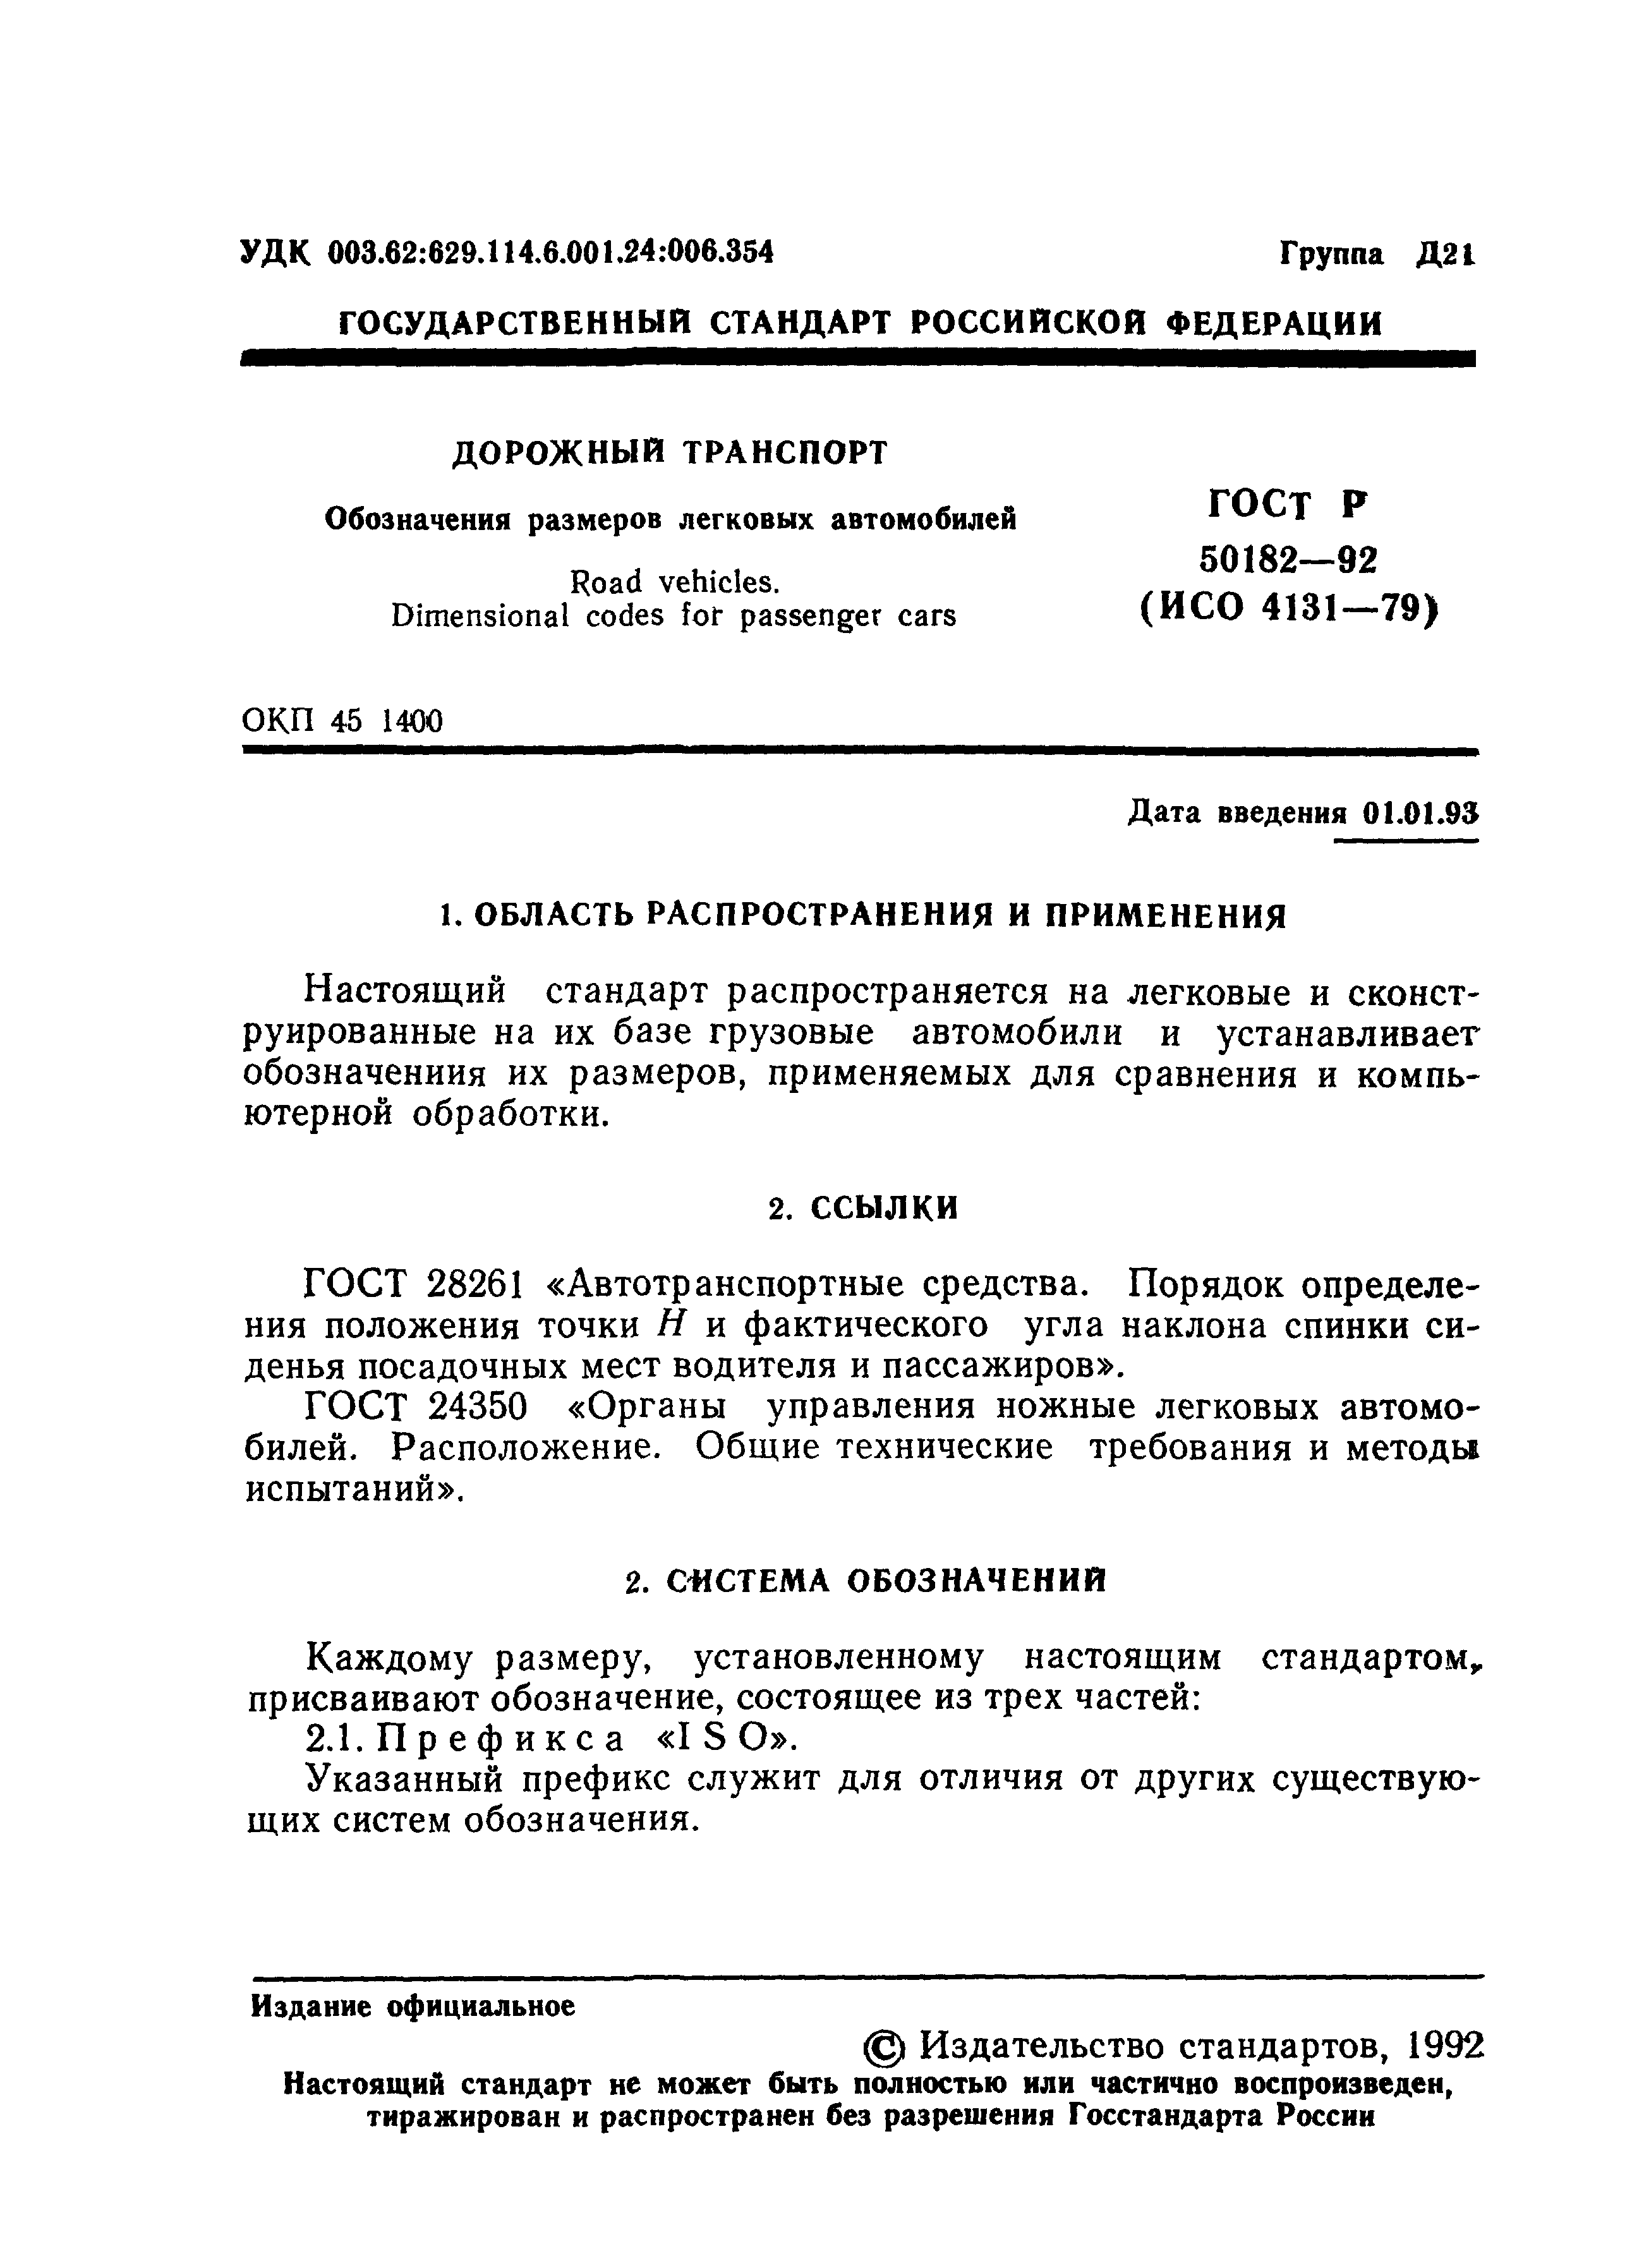 ГОСТ Р 50182-92